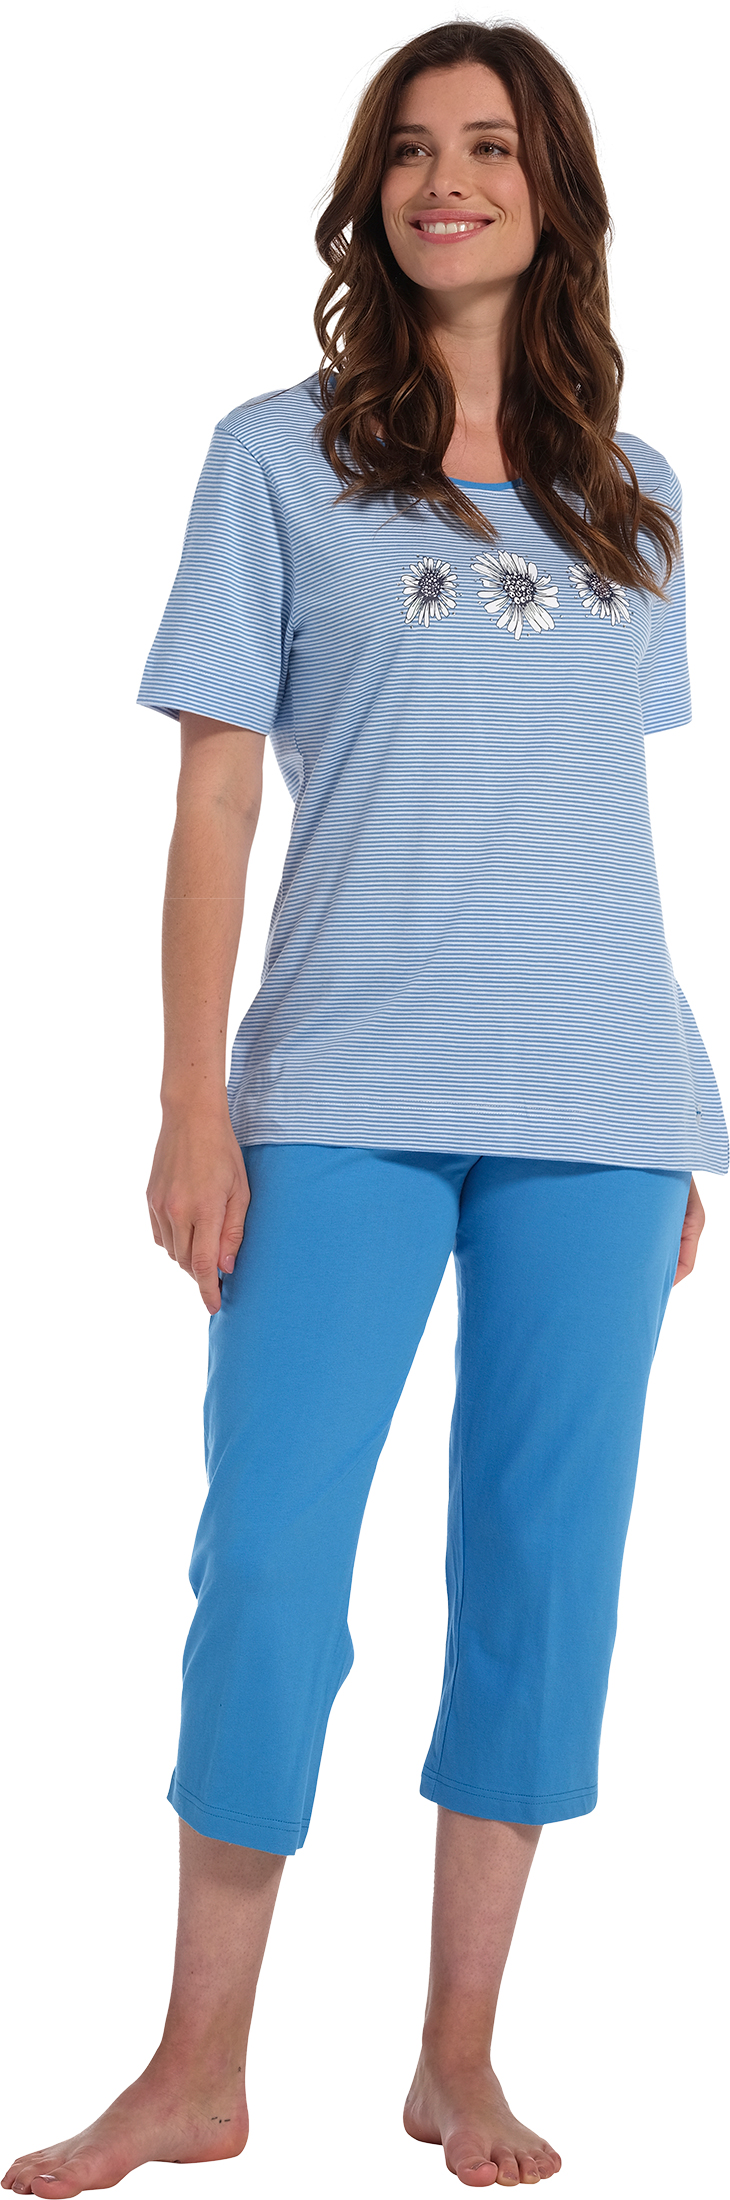 Pastunette dames pyjama capri 20231-130-2 - Blauw - 50